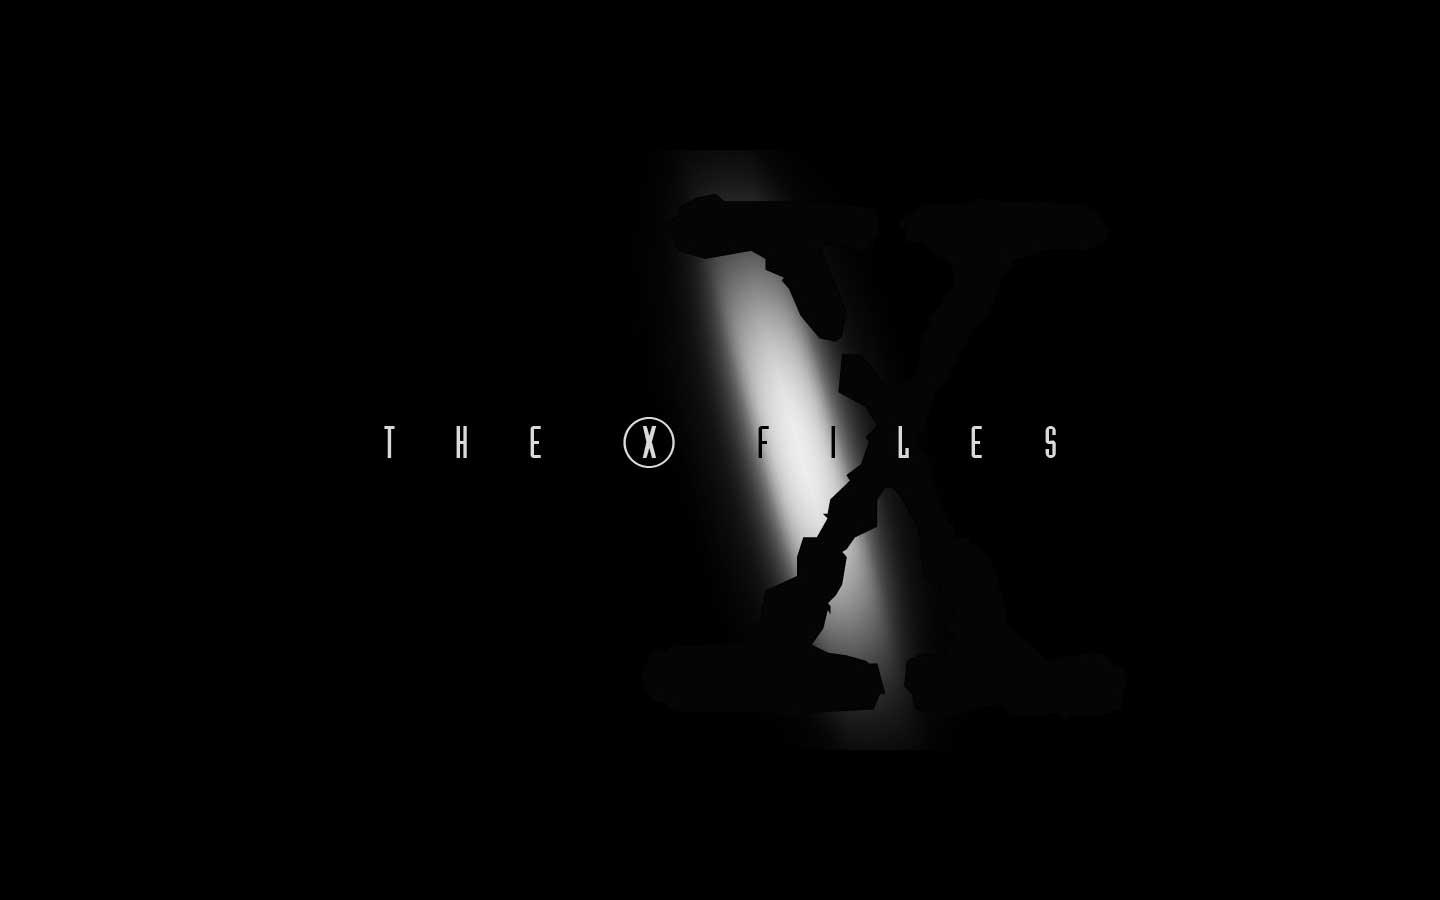 Fonds d&;écran X Files, tous les wallpaper X Files